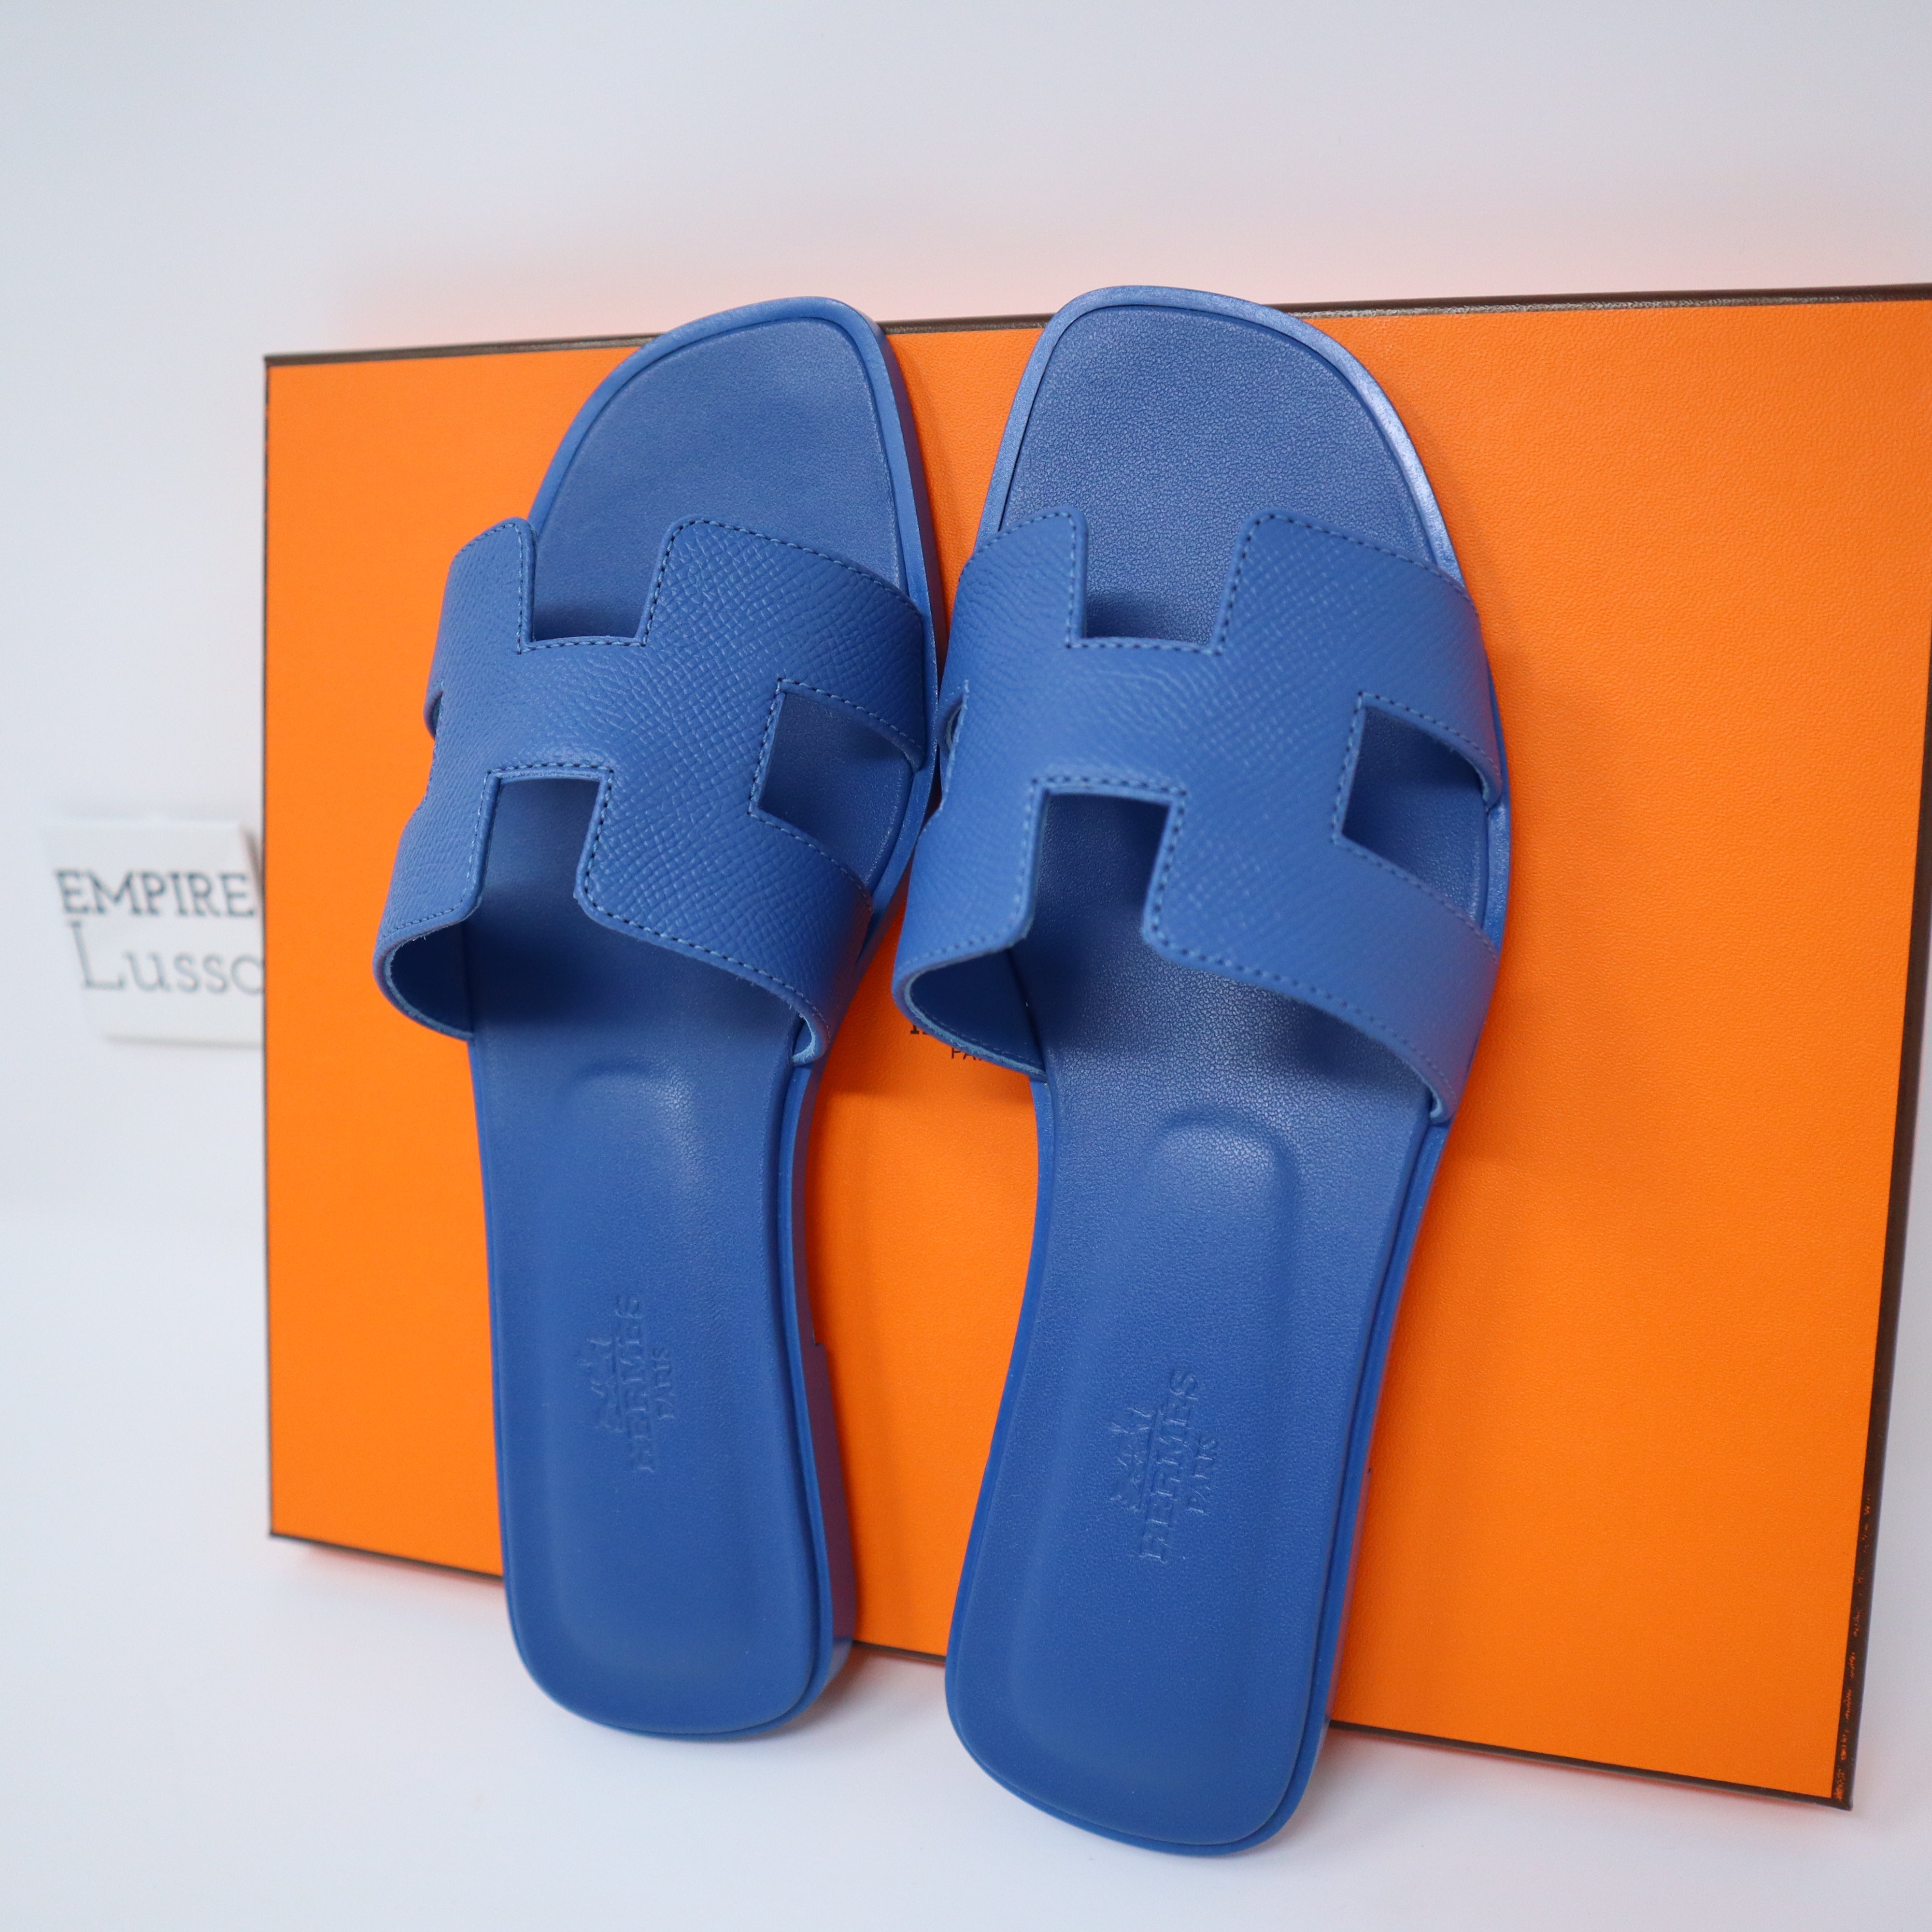 Original Oasis Ladies' Sandal in Epsom Leather Light Blue Slippers